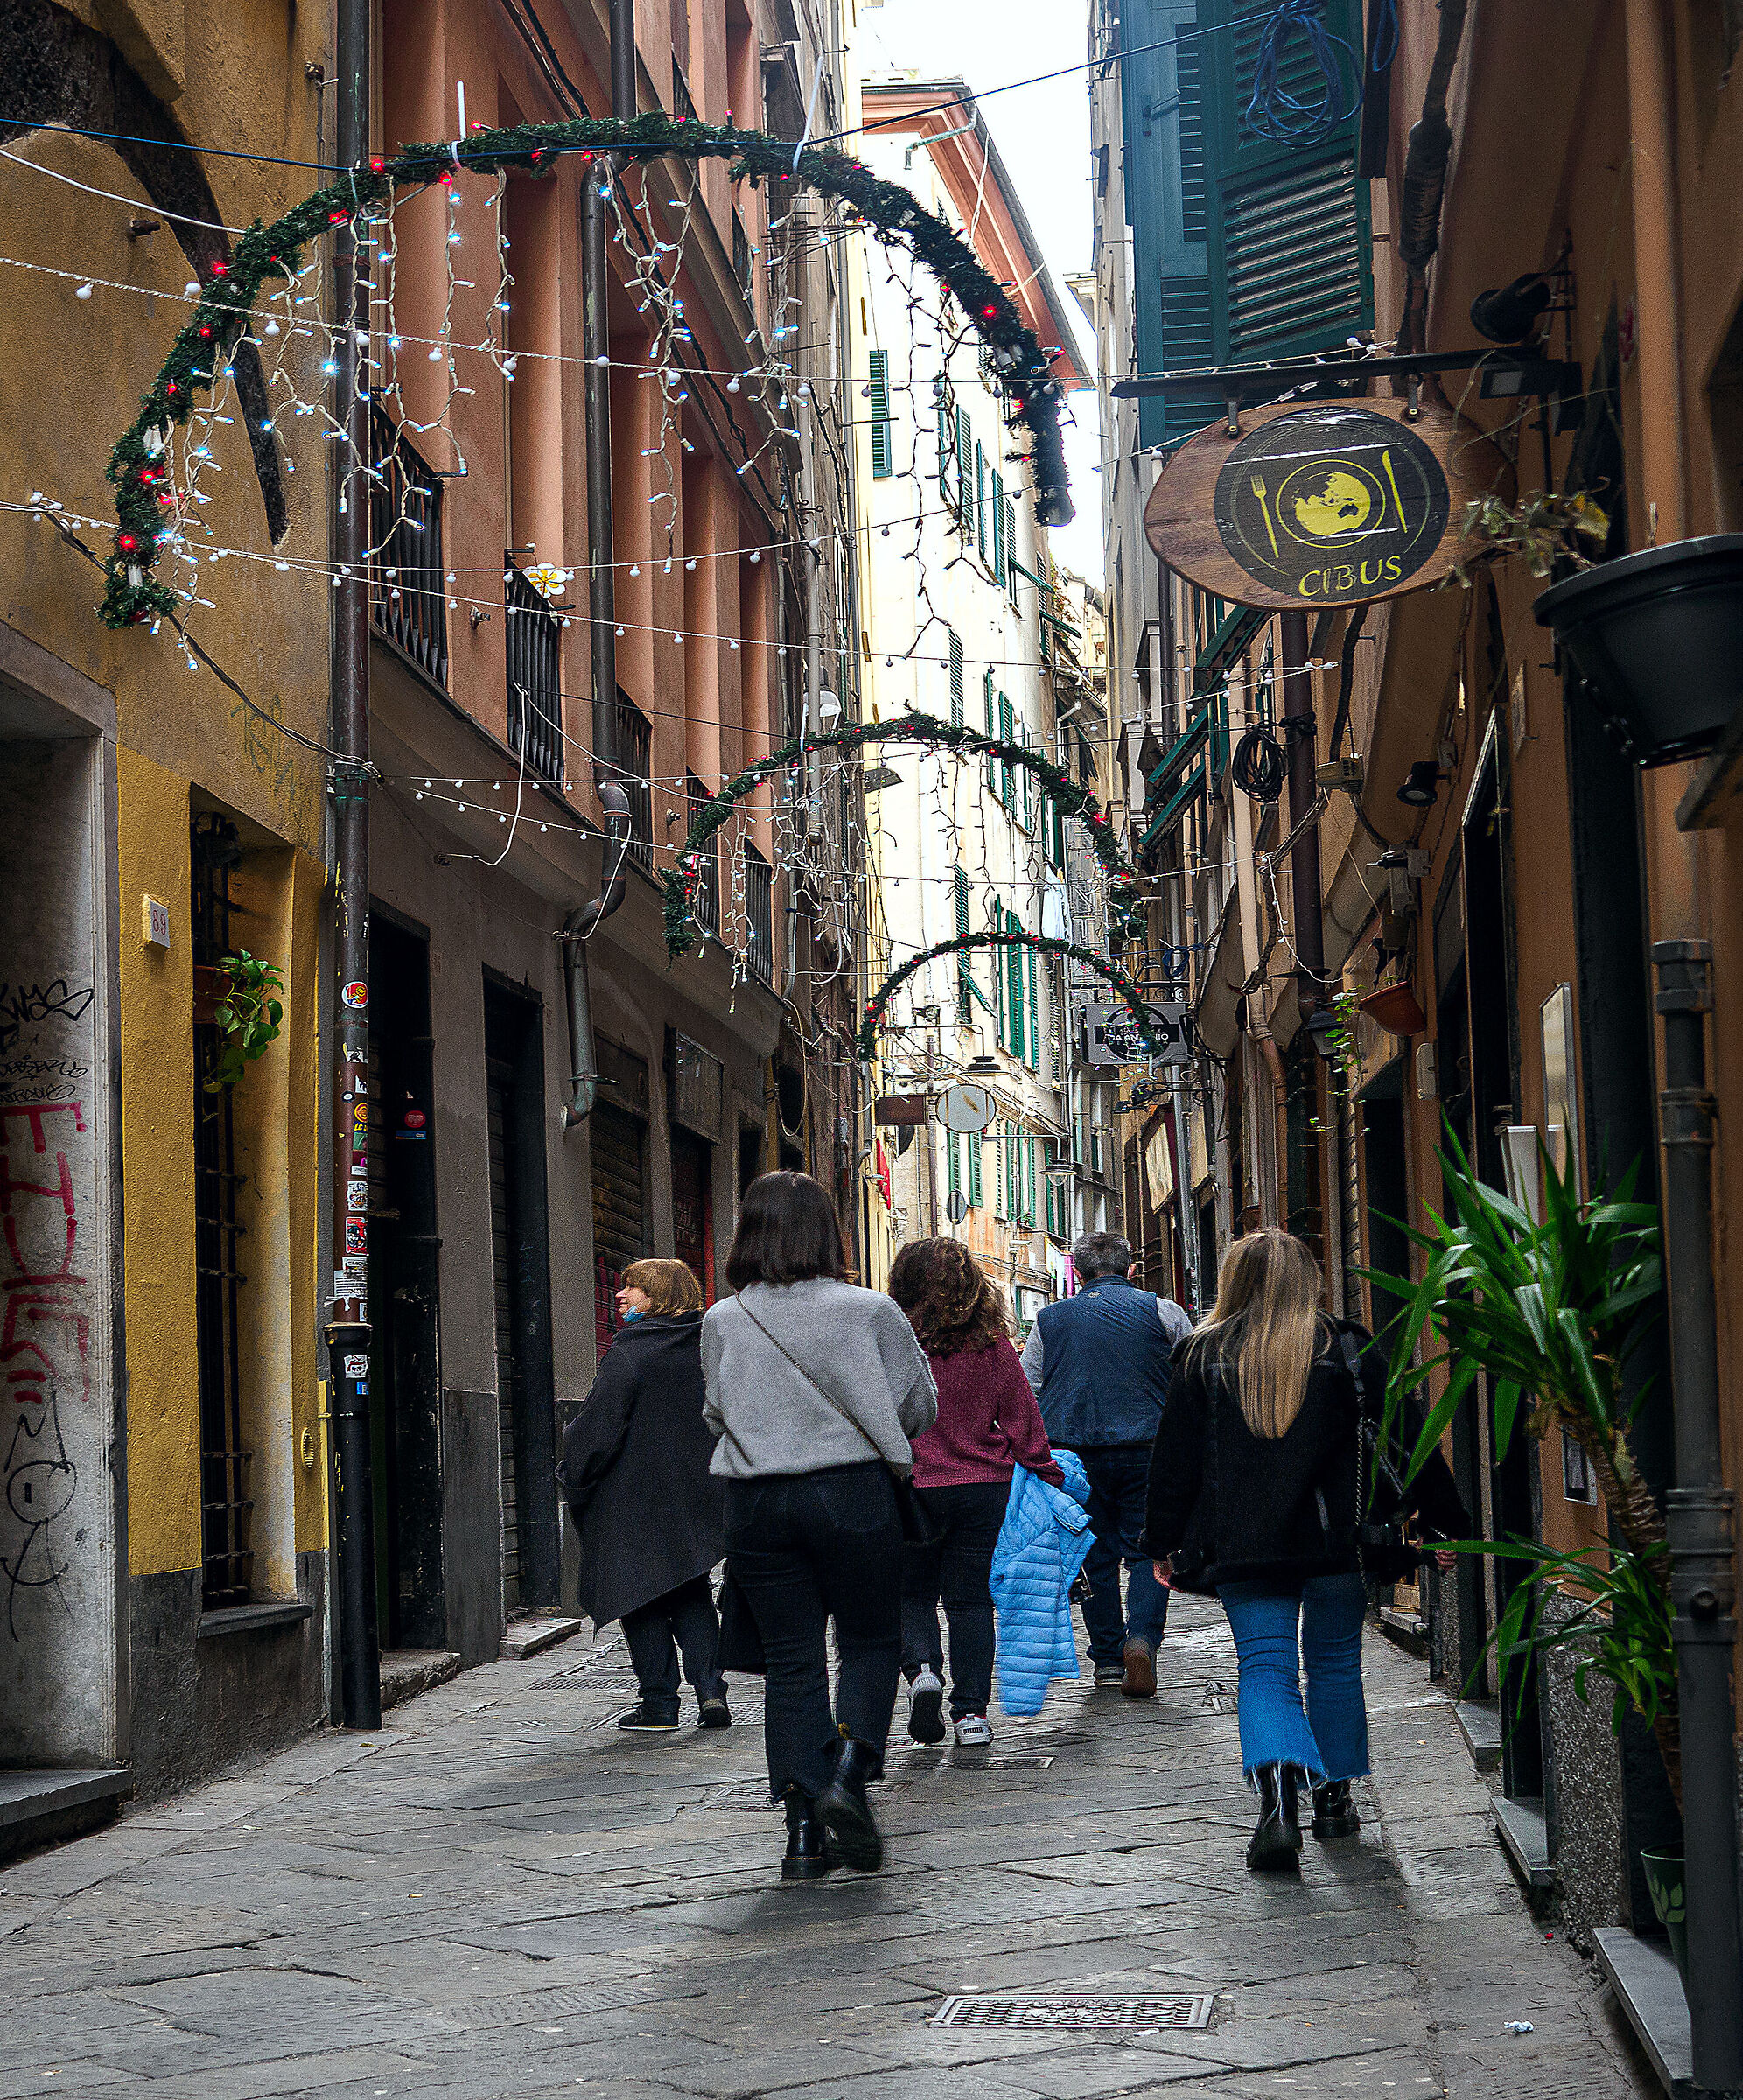 Genoa - Walking through the alleys...